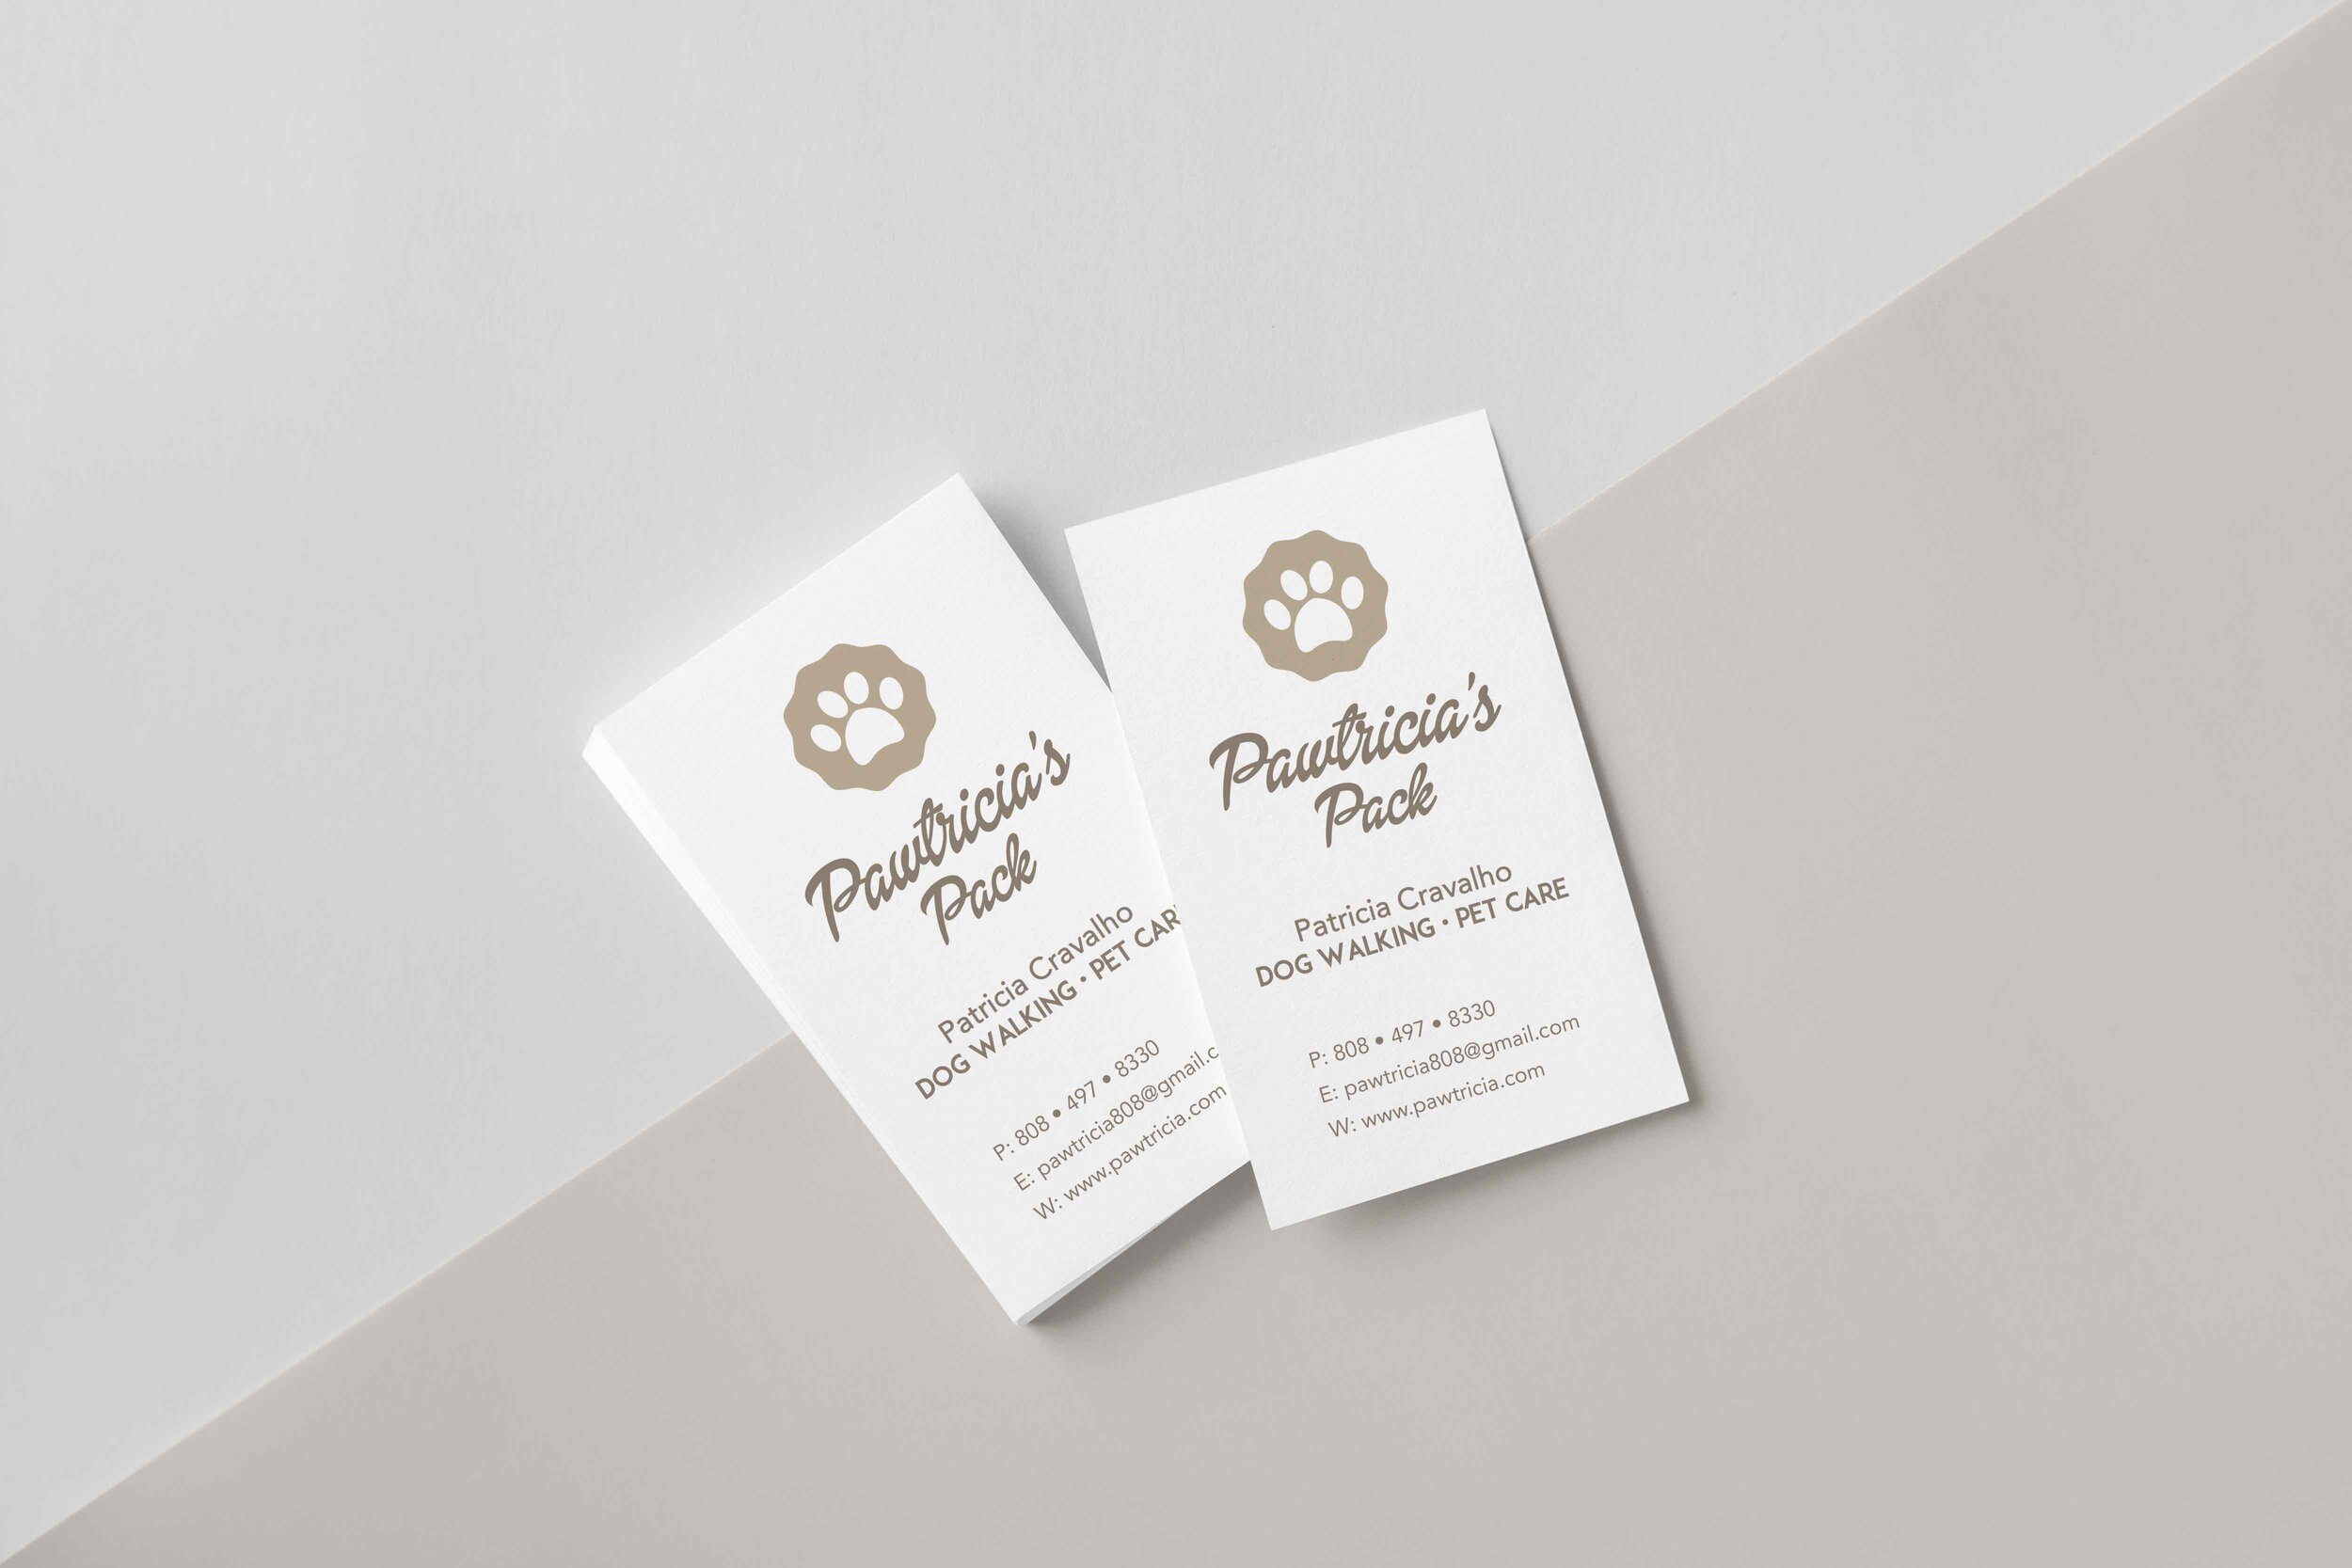 PatriciasPack business card.jpg